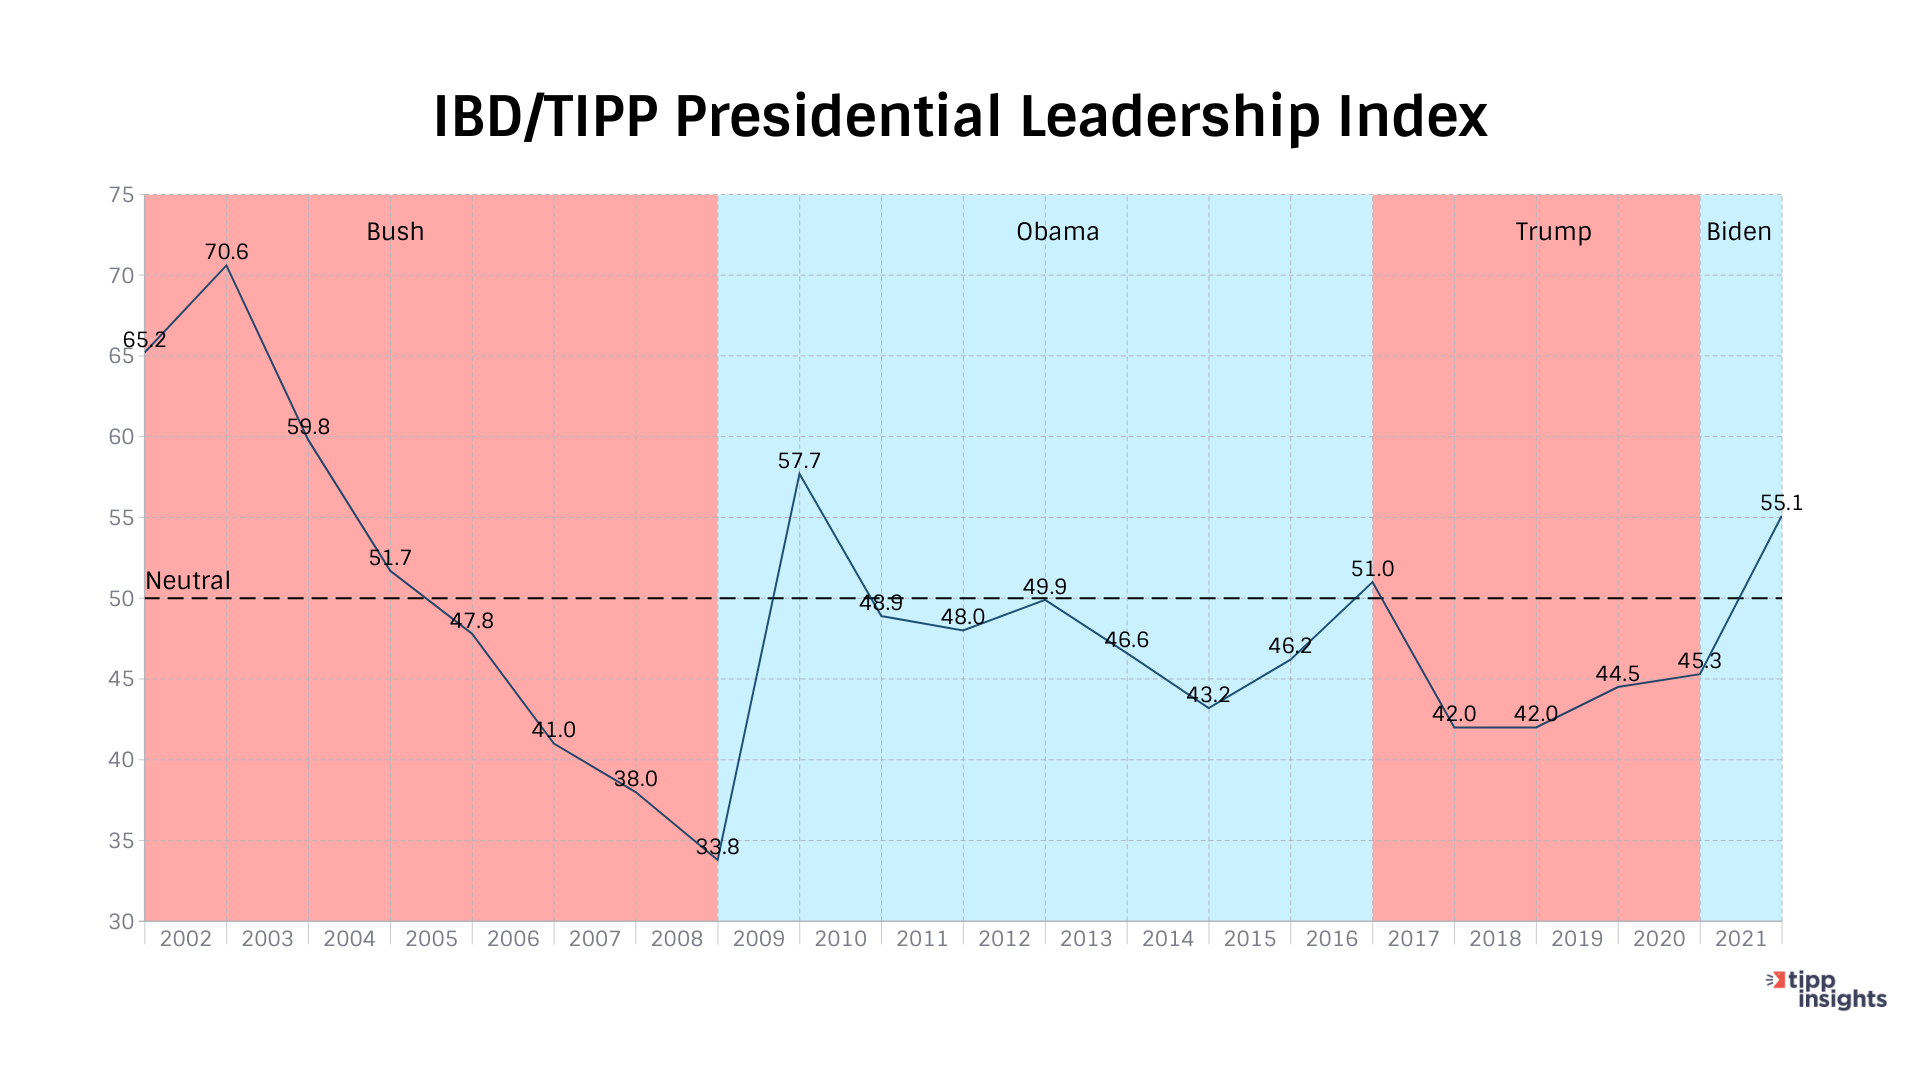 IBD/TIPP Poll Results: Presidential leadership index 2002-2021